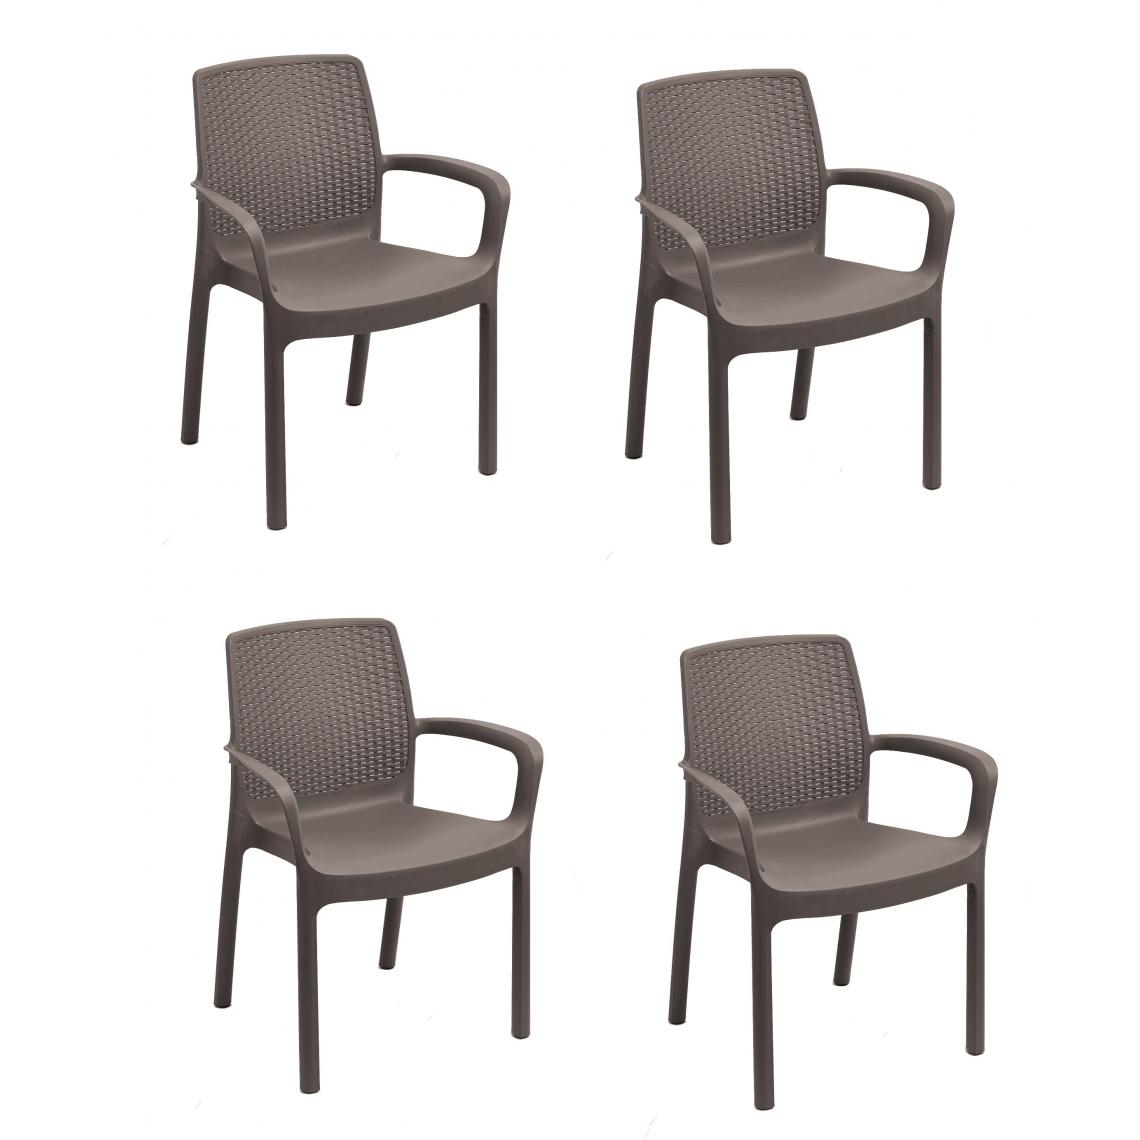 Alter - Ensemble de 4 chaises empilables effet rotin, Made in Italy, couleur marron, Dimensions 54 x 82 x 60,5 cm - Chaises